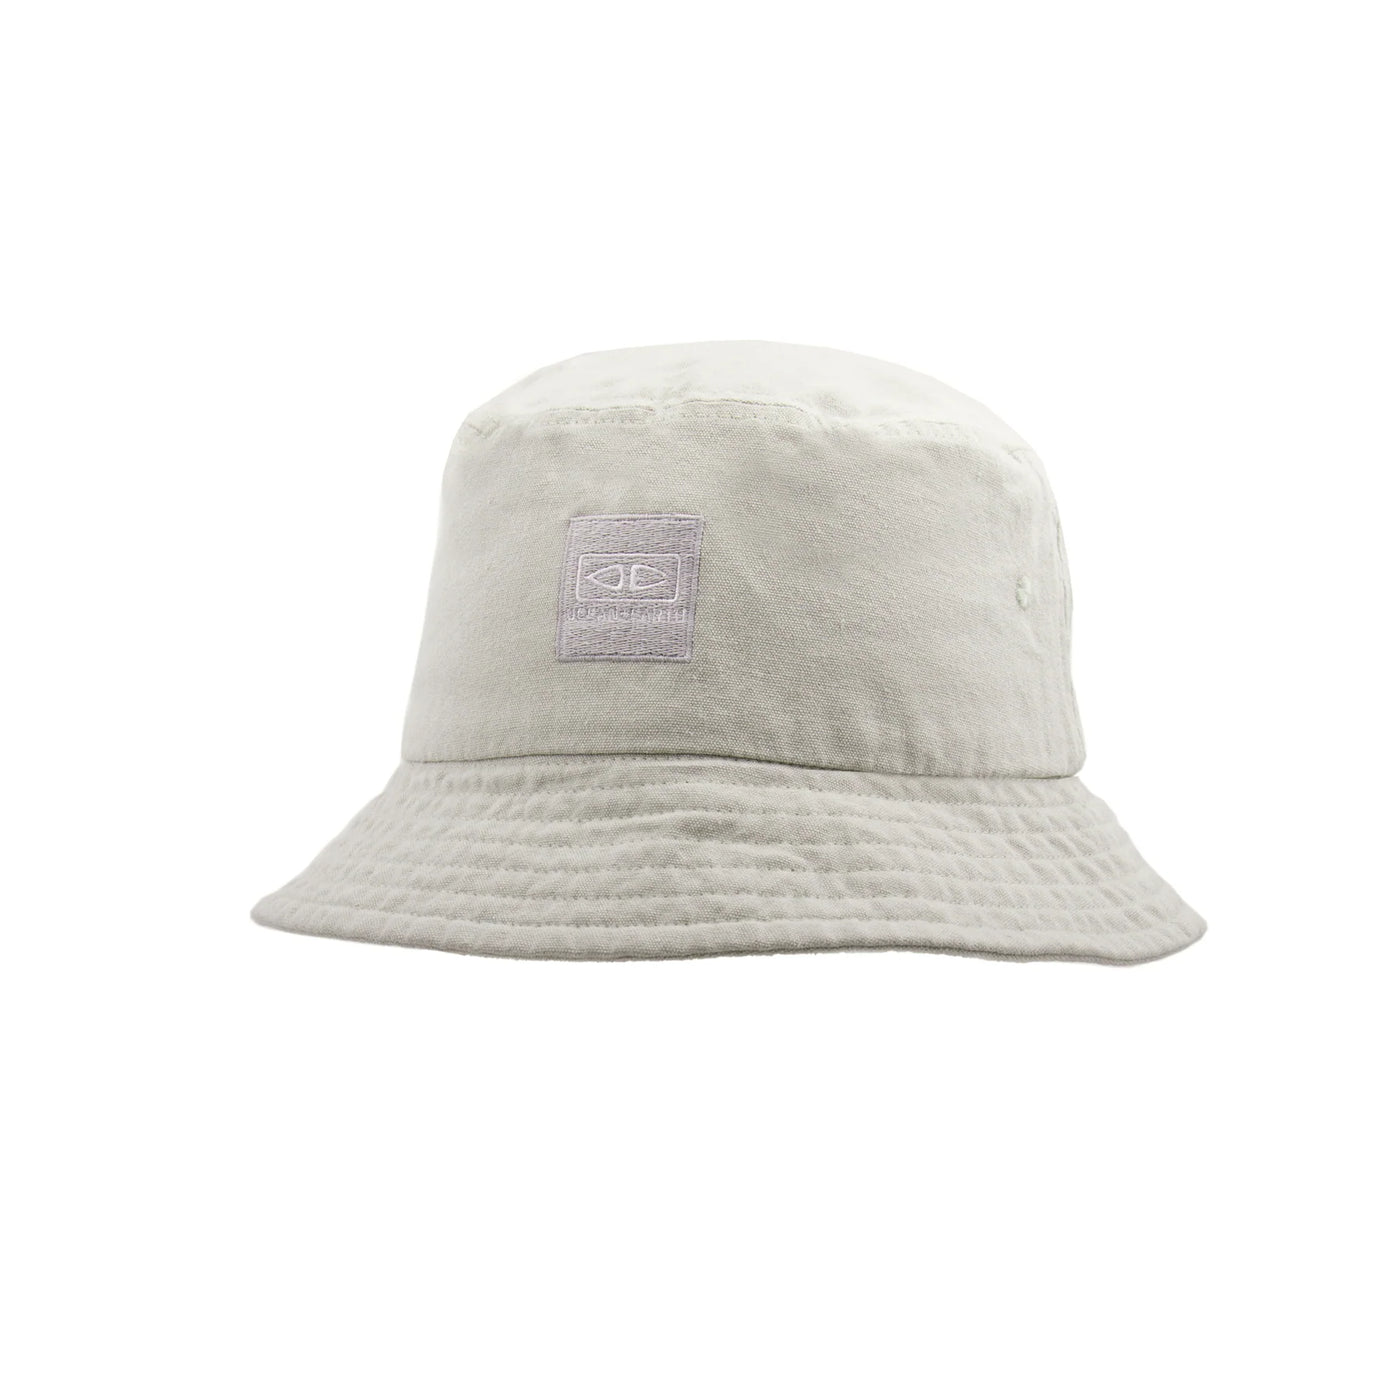 Ocean & Earth Corp Bucket Hat Gorro Pescador